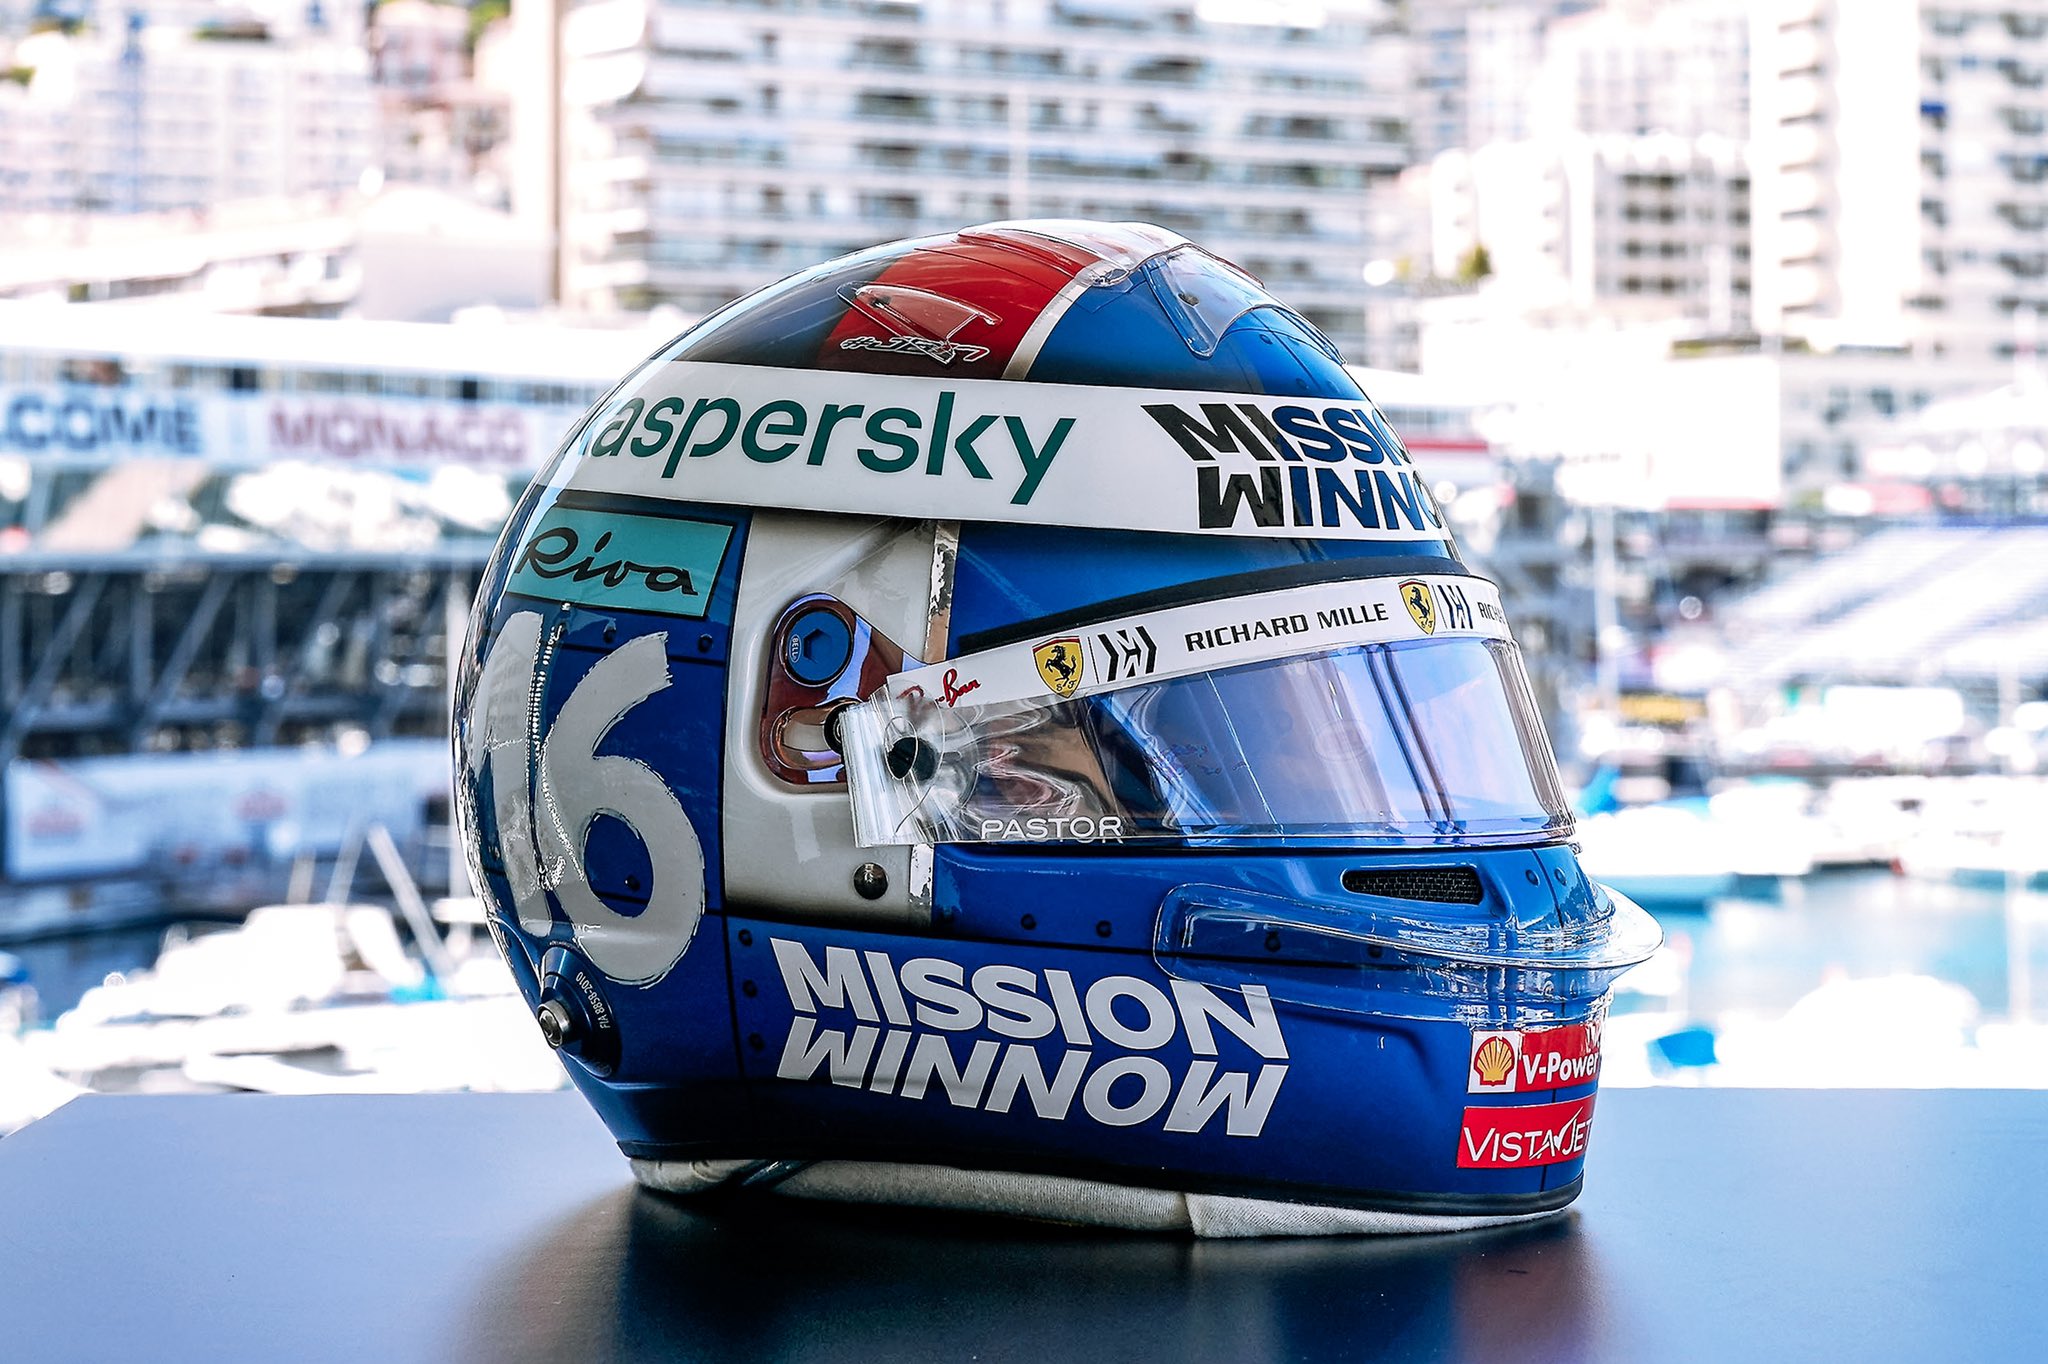 Charles Leclerc 2021 Monaco Grand Prix helmet